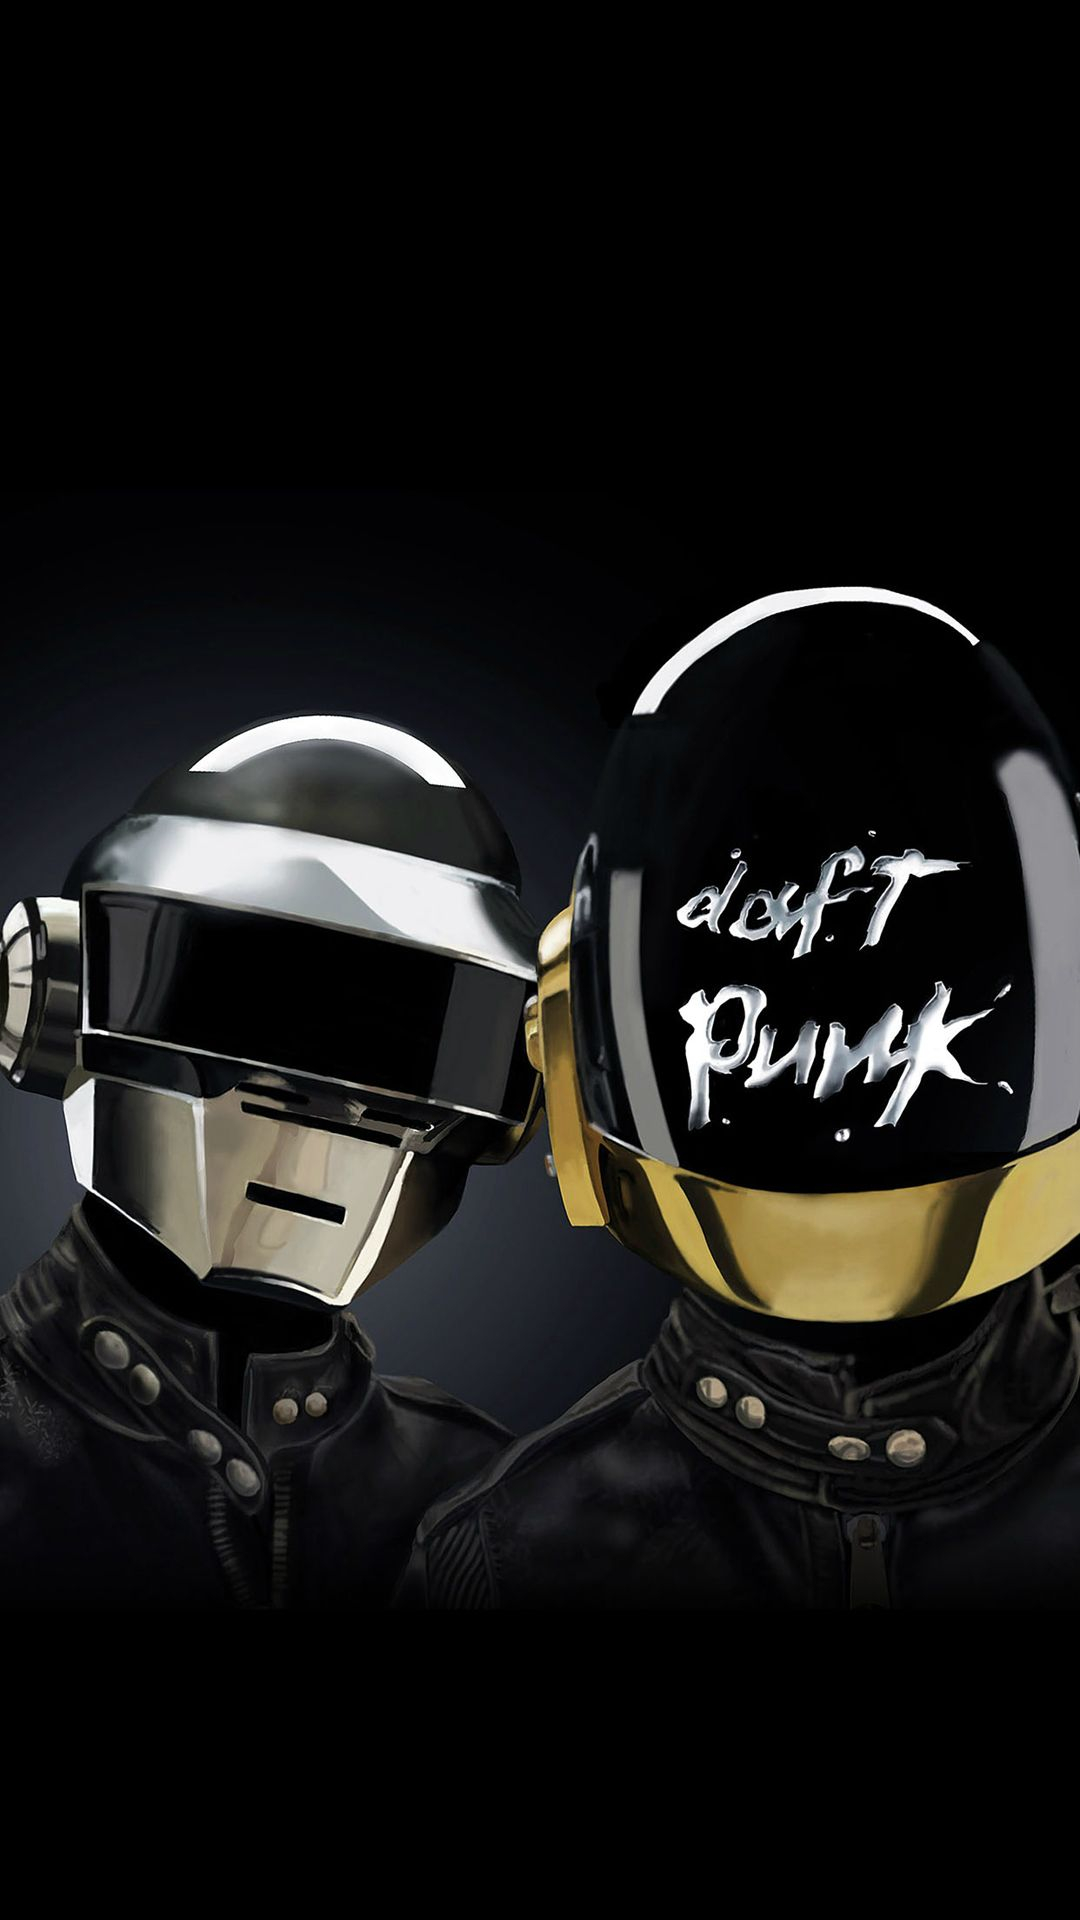 1080x1920 Daft Punk Cute Music Face iPhone 6 Wallpaper Download | iPhone Wallpapers, iPad wallpapers One-stop Download | Daft punk, Daft punk albums, Daft punk poster